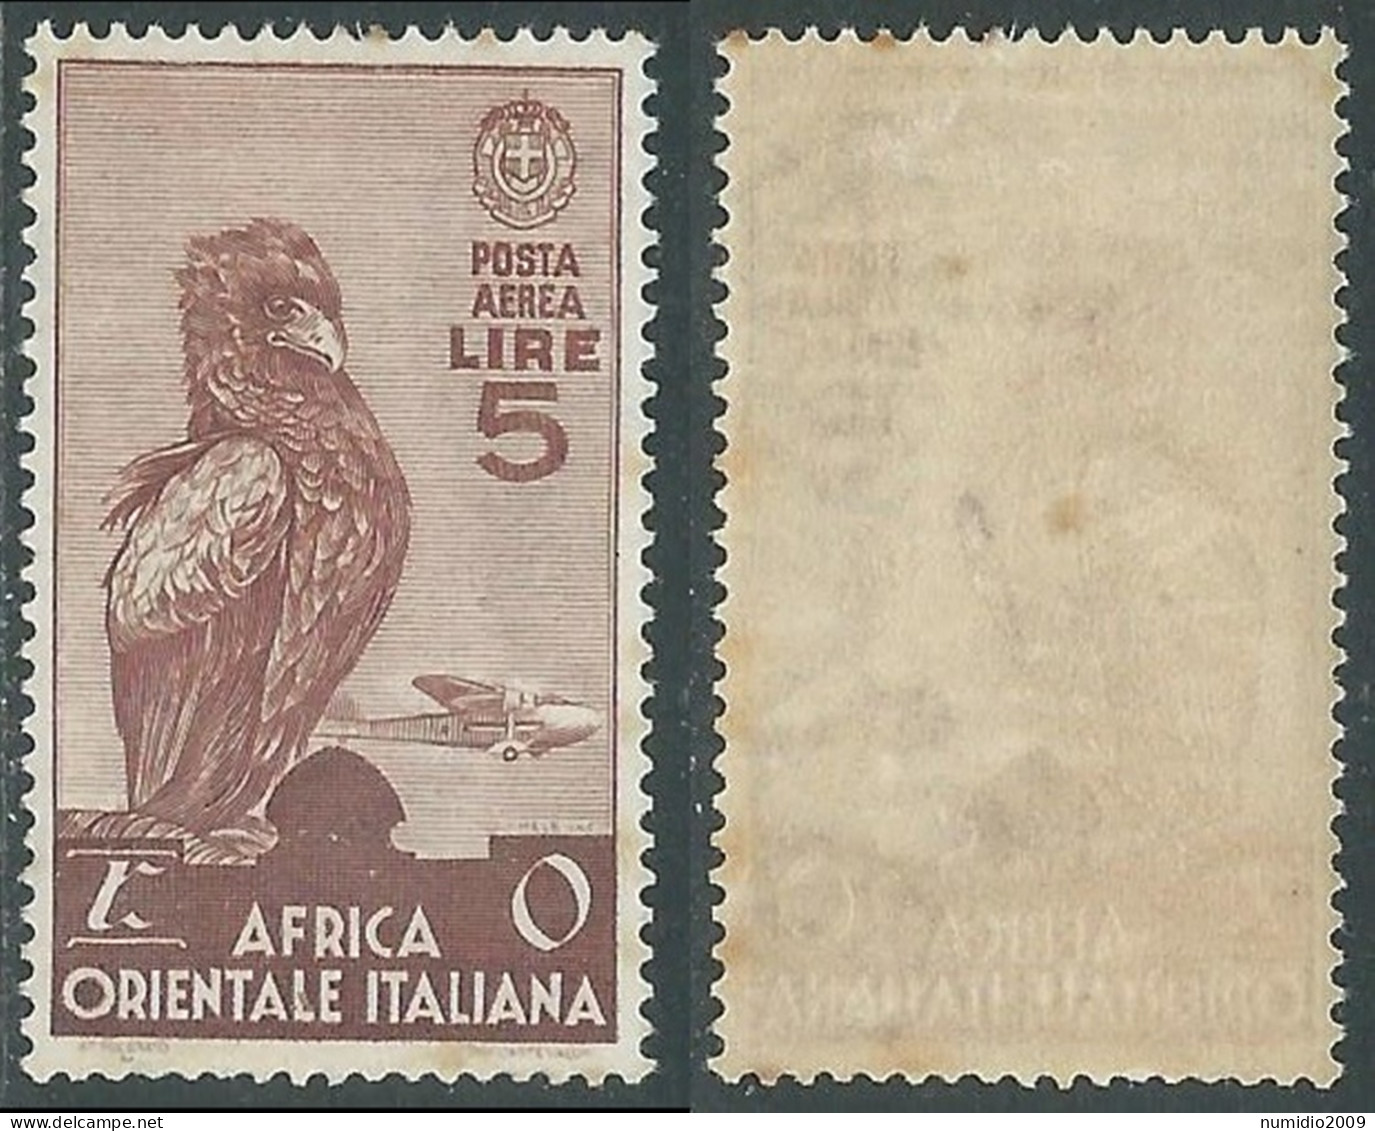 1938 AFRICA ORIENTALE ITALIANA POSTA AEREA 5 LIRE MACCHIE SU GOMMA MH * - I41 - Italian Eastern Africa